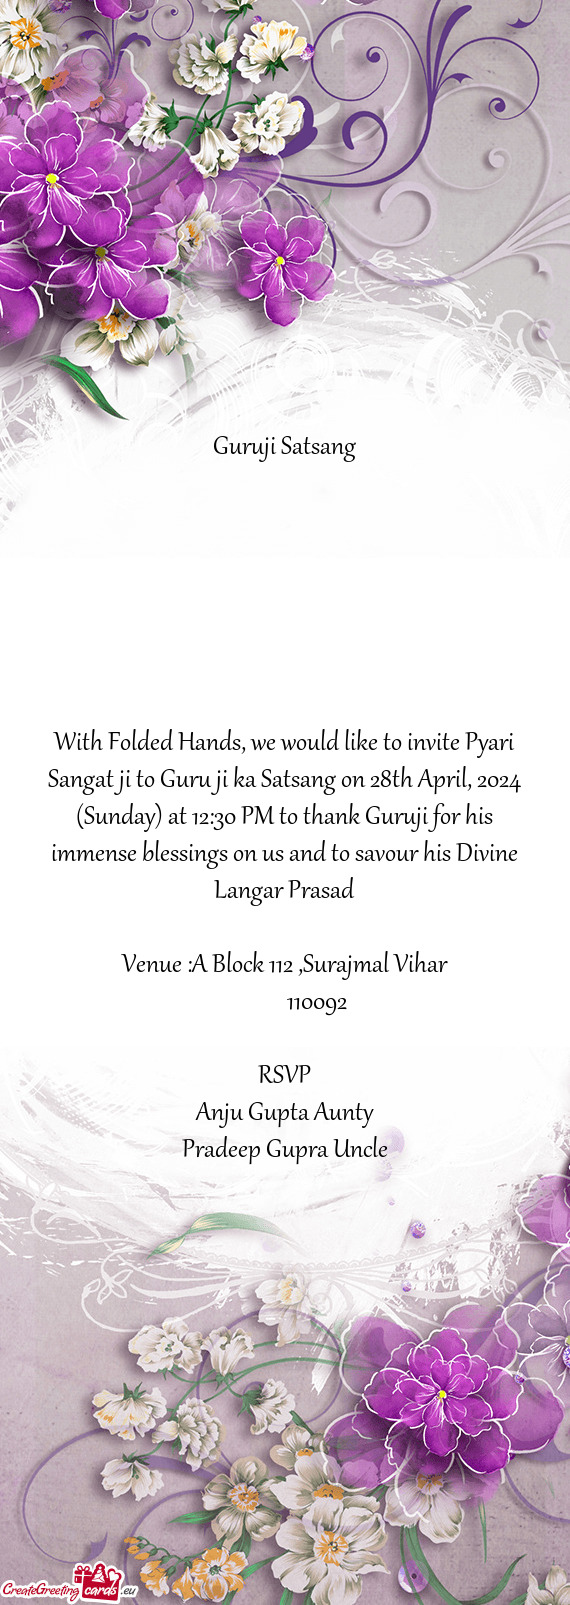 With Folded Hands, we would like to invite Pyari Sangat ji to Guru ji ka Satsang on 28th April, 2024